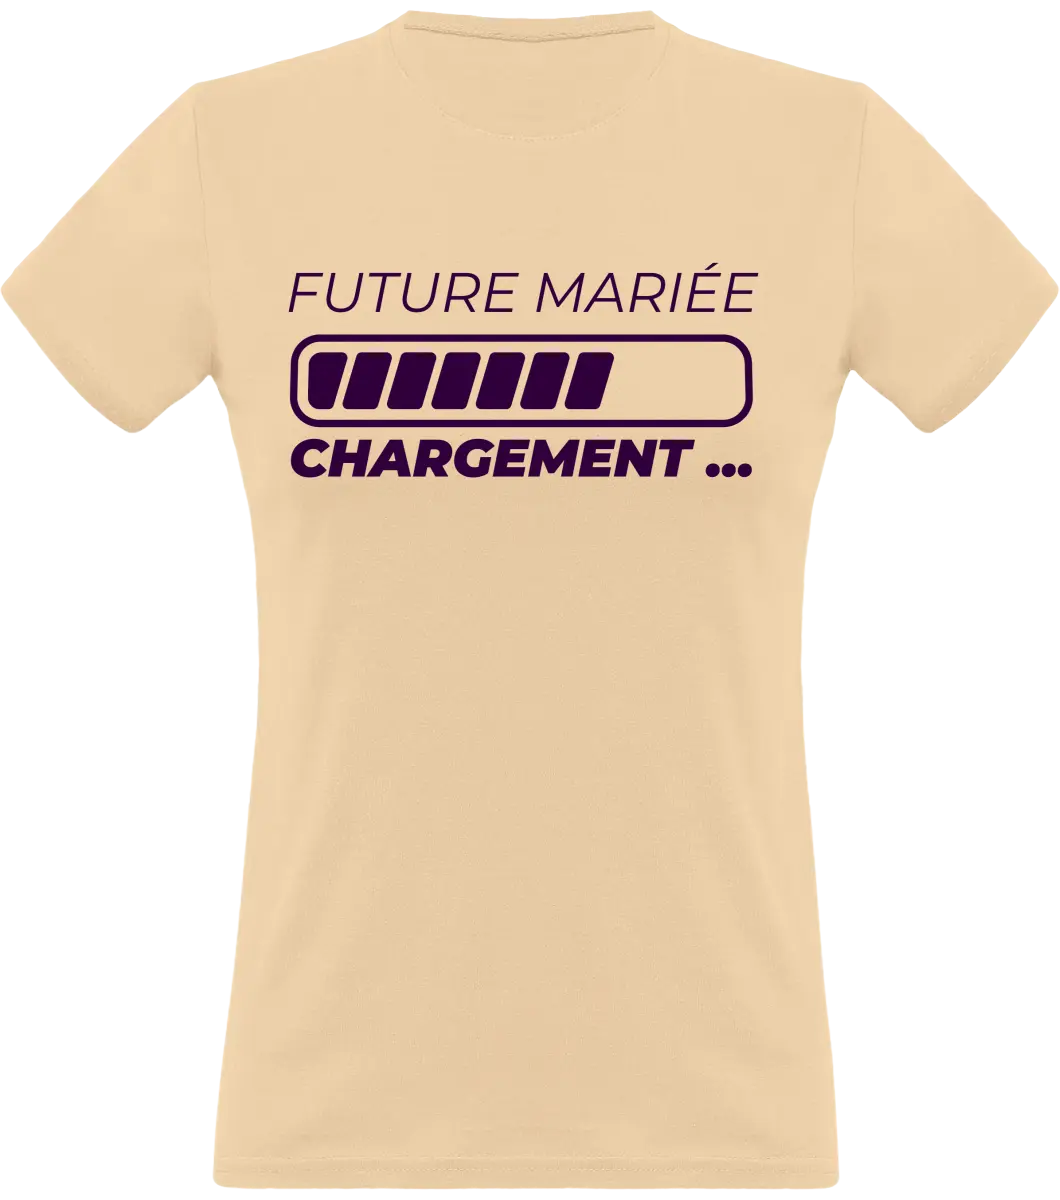 T-shirt EVJF "Future mariée chargement" - French Humour